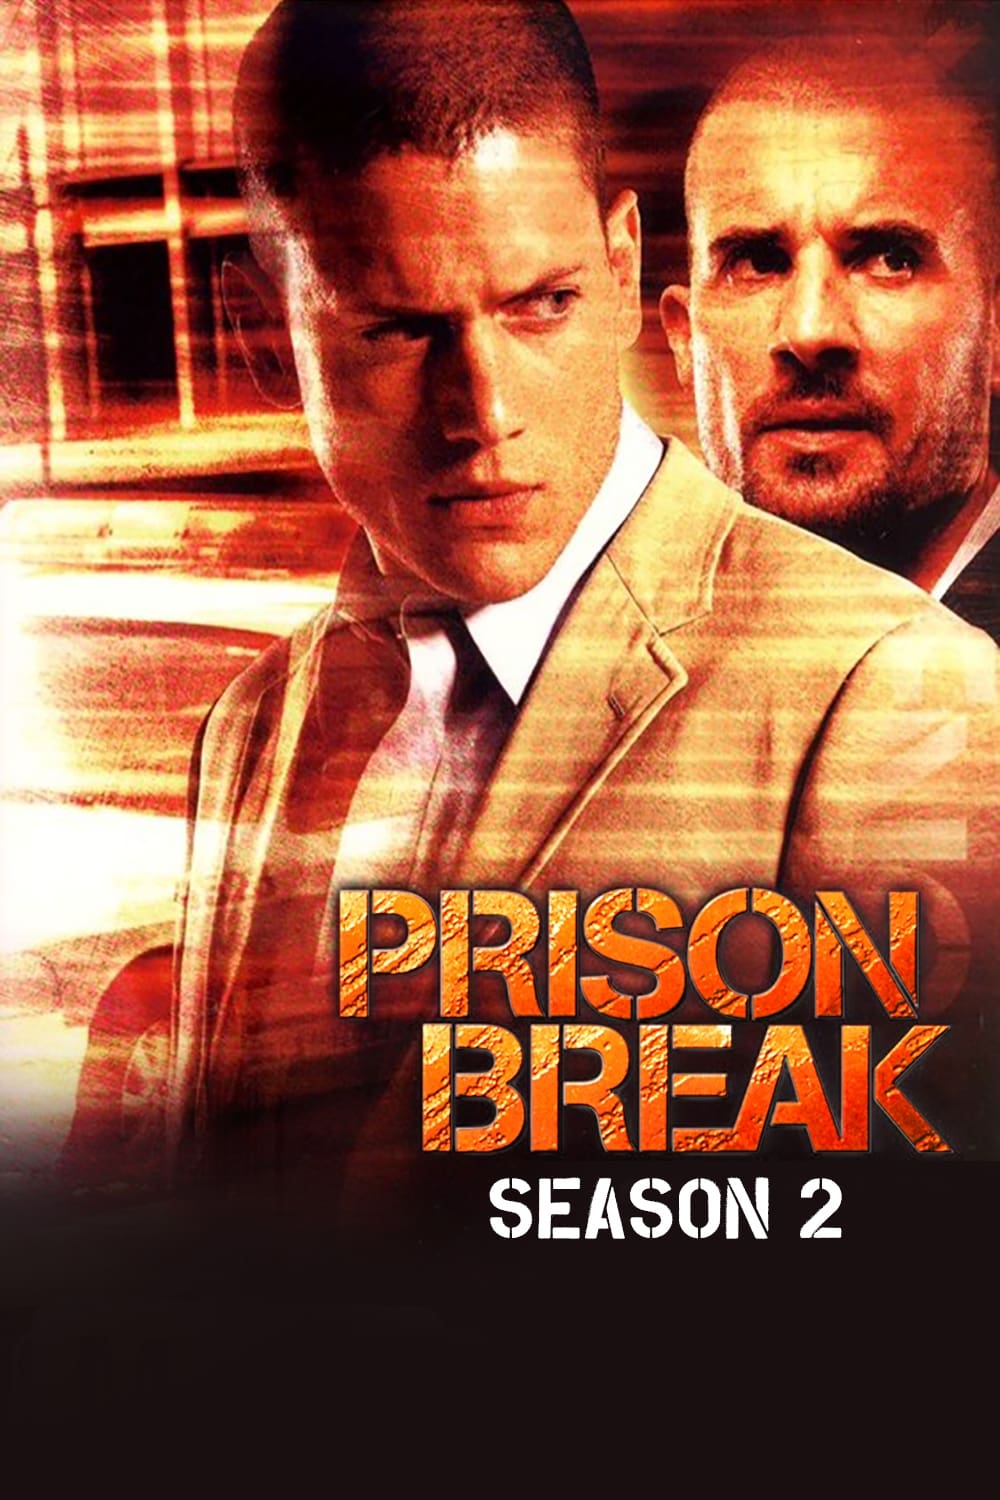 Prison Break (Season 2) Complete English WEB-DL 1080p 720p x264 HD [ALL Episodes] | Full Series